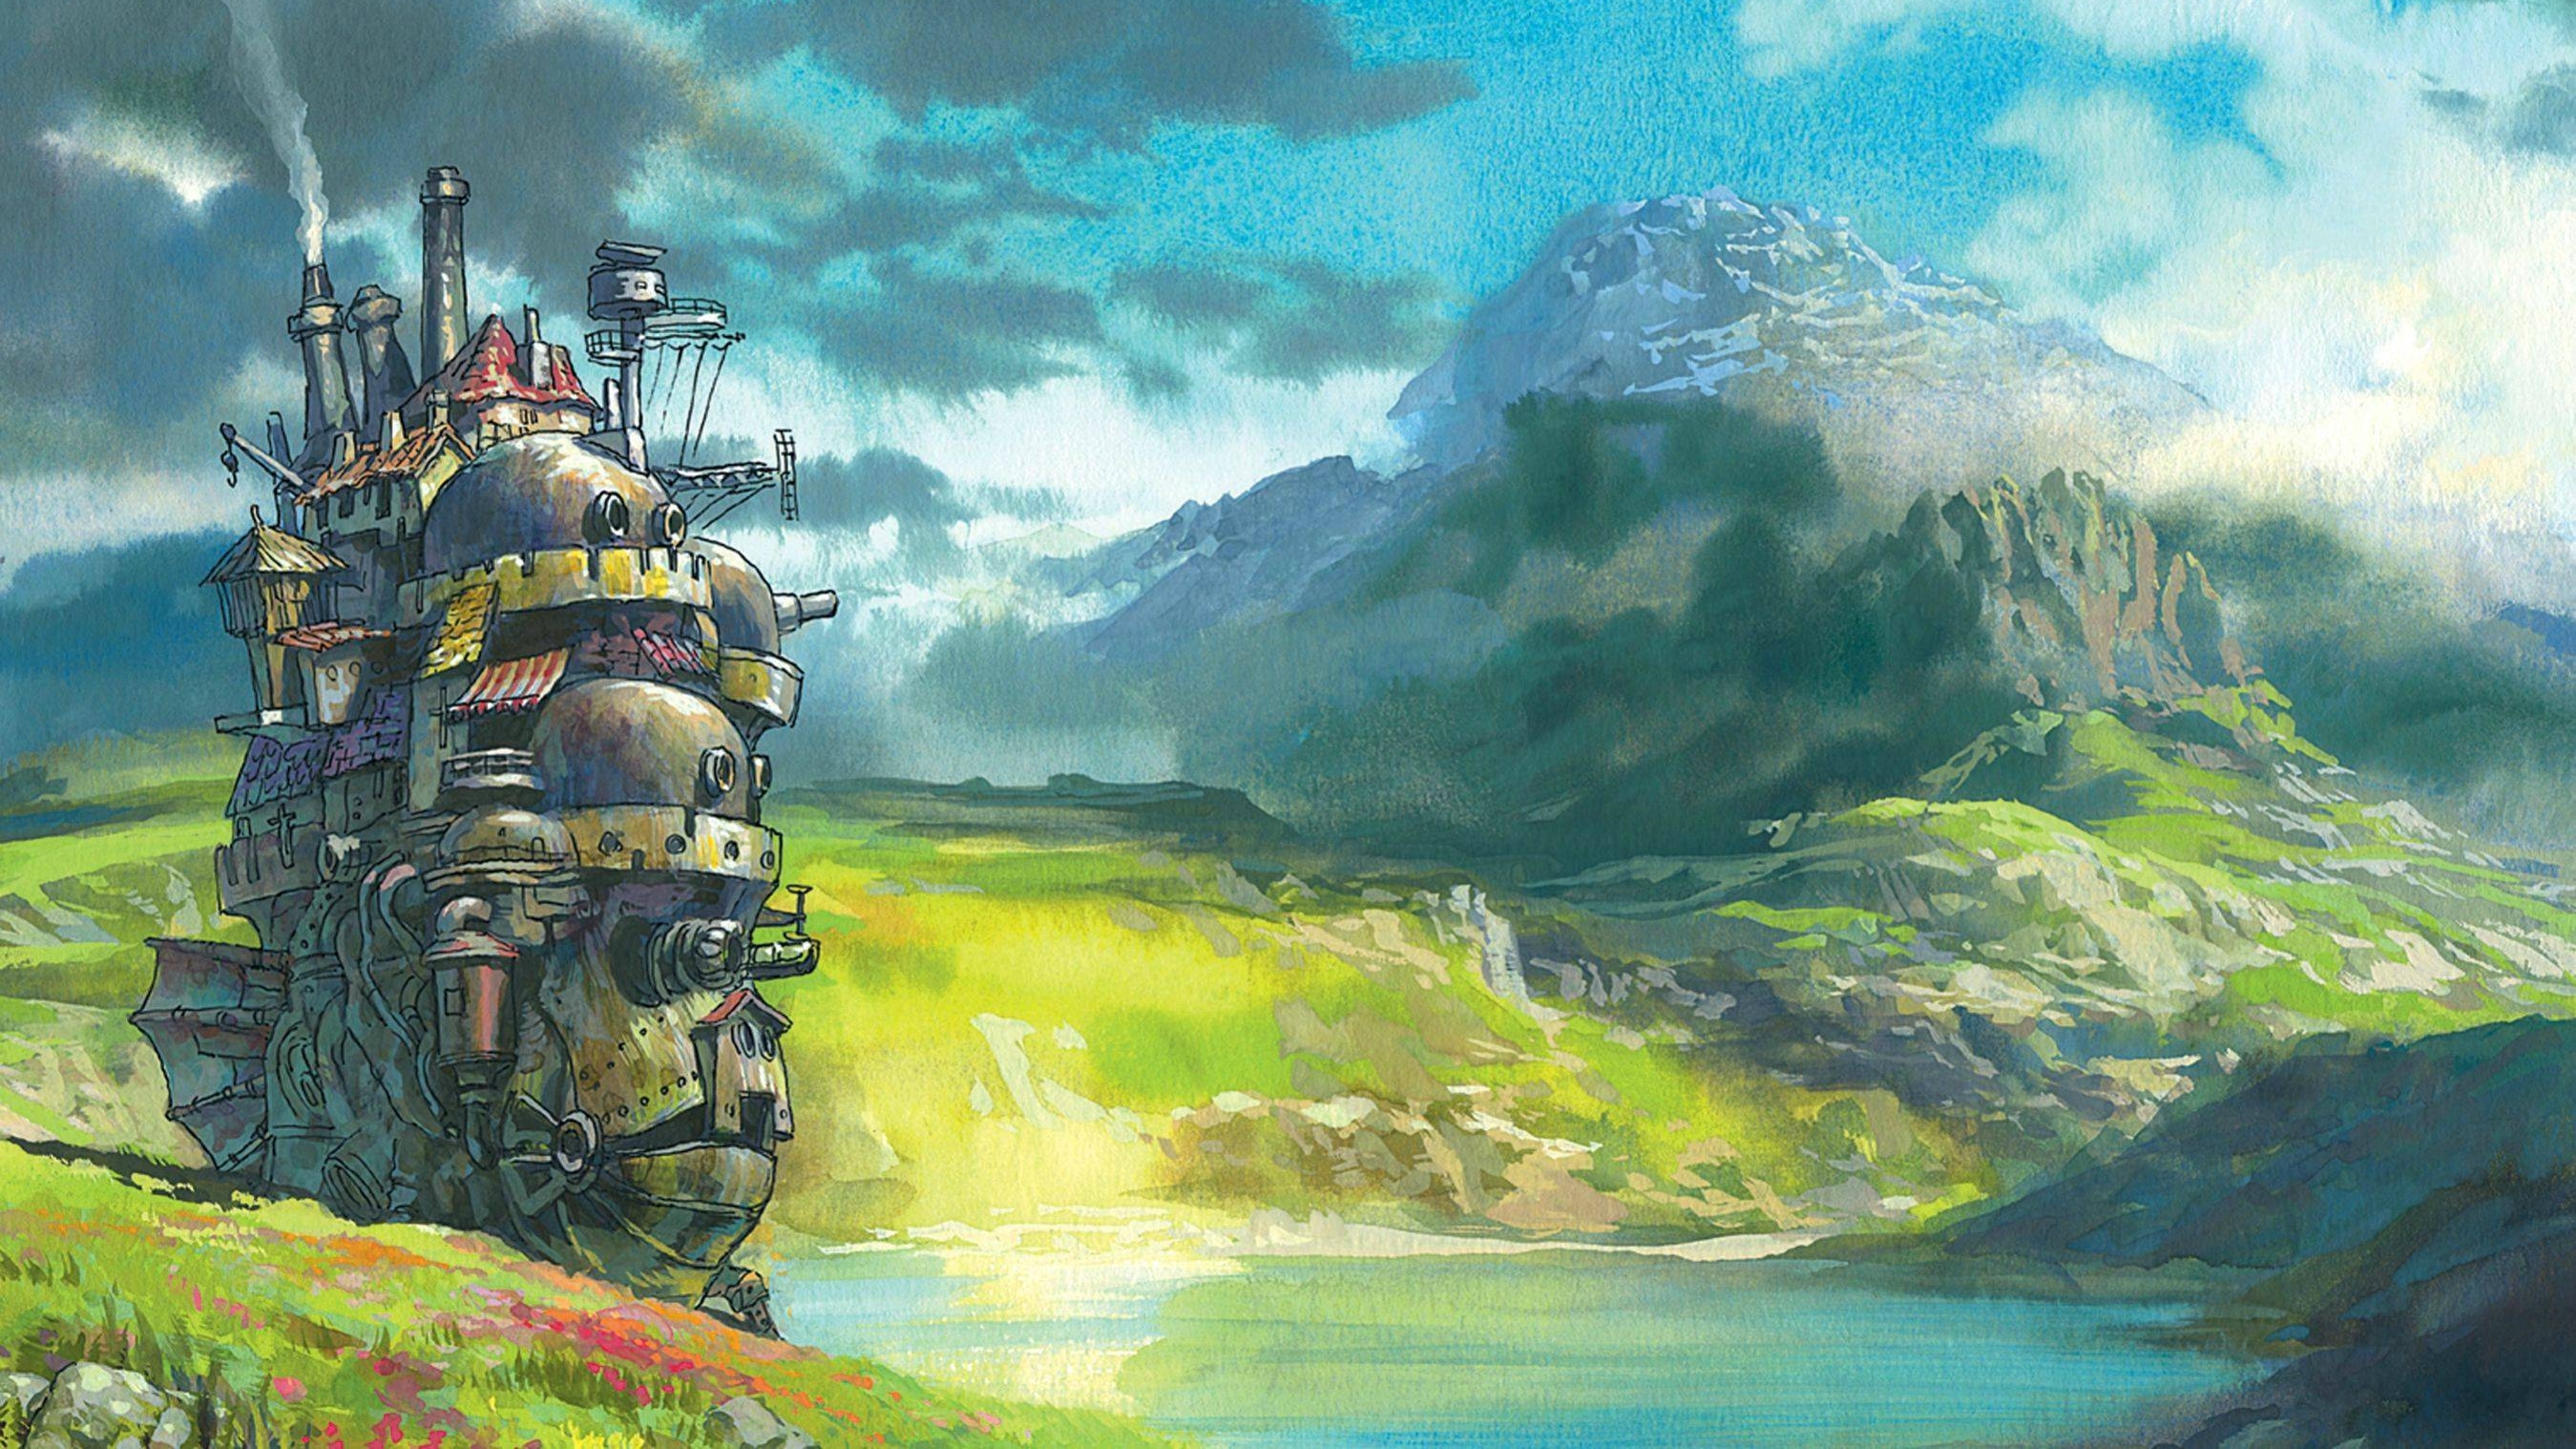 Studio Ghibli Hd Wallpaper - Howl's Moving Castle Background - HD Wallpaper 